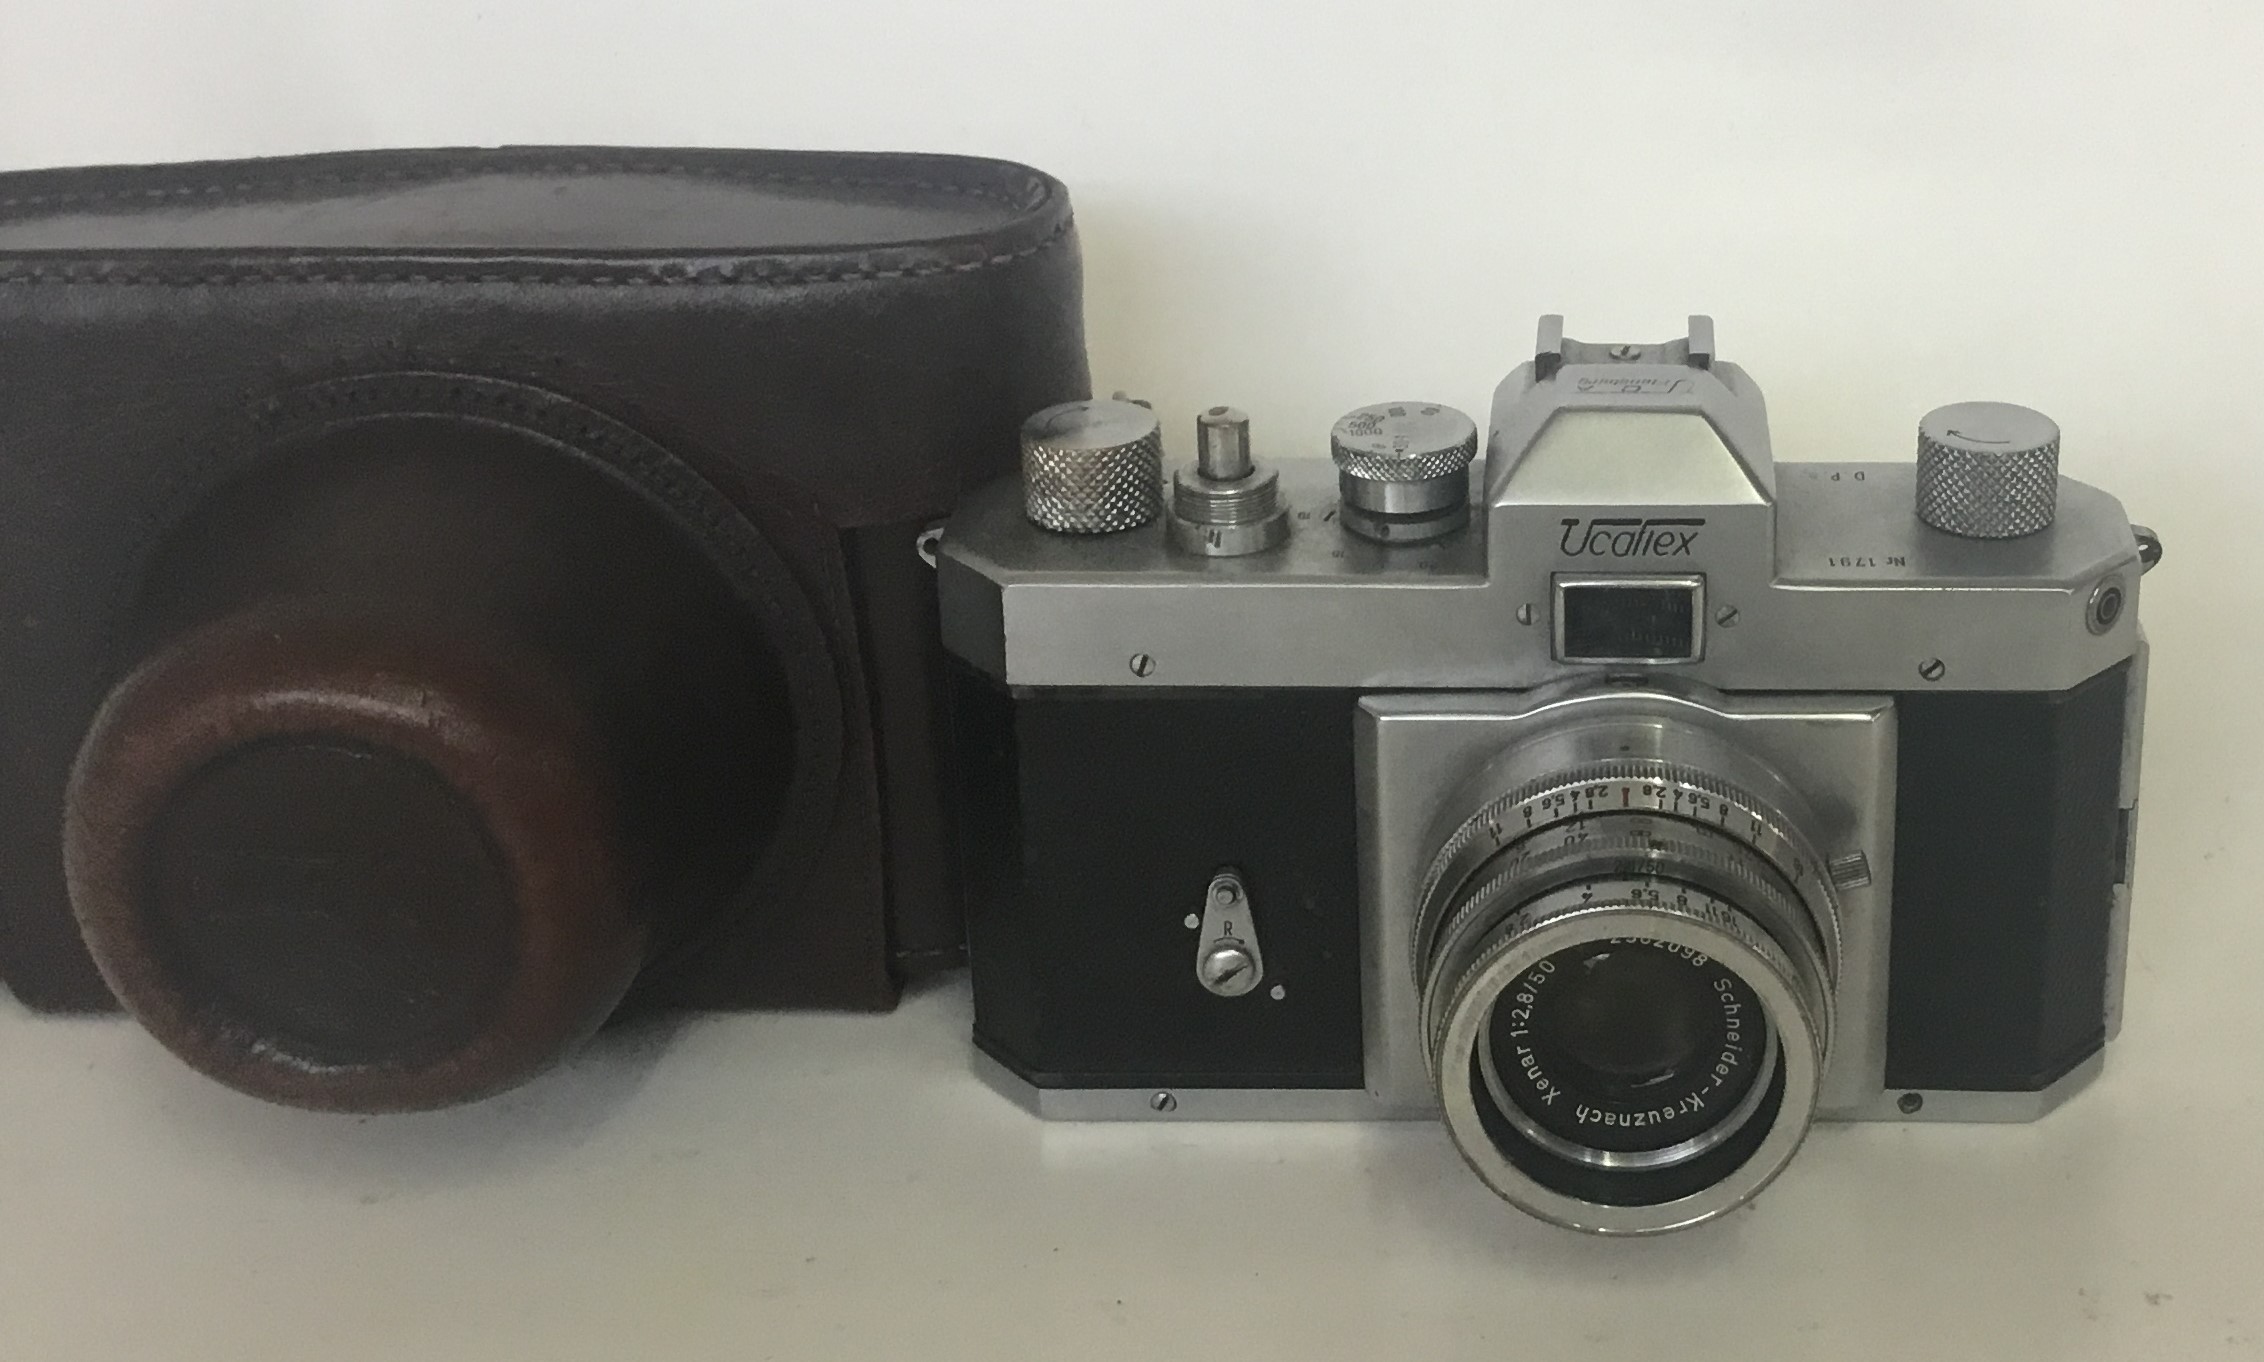 Elop Ucaflex Camera Serial No:1791 Lens: 50mm Schneidar Xenar Accessories: Leather Case Age of Item: